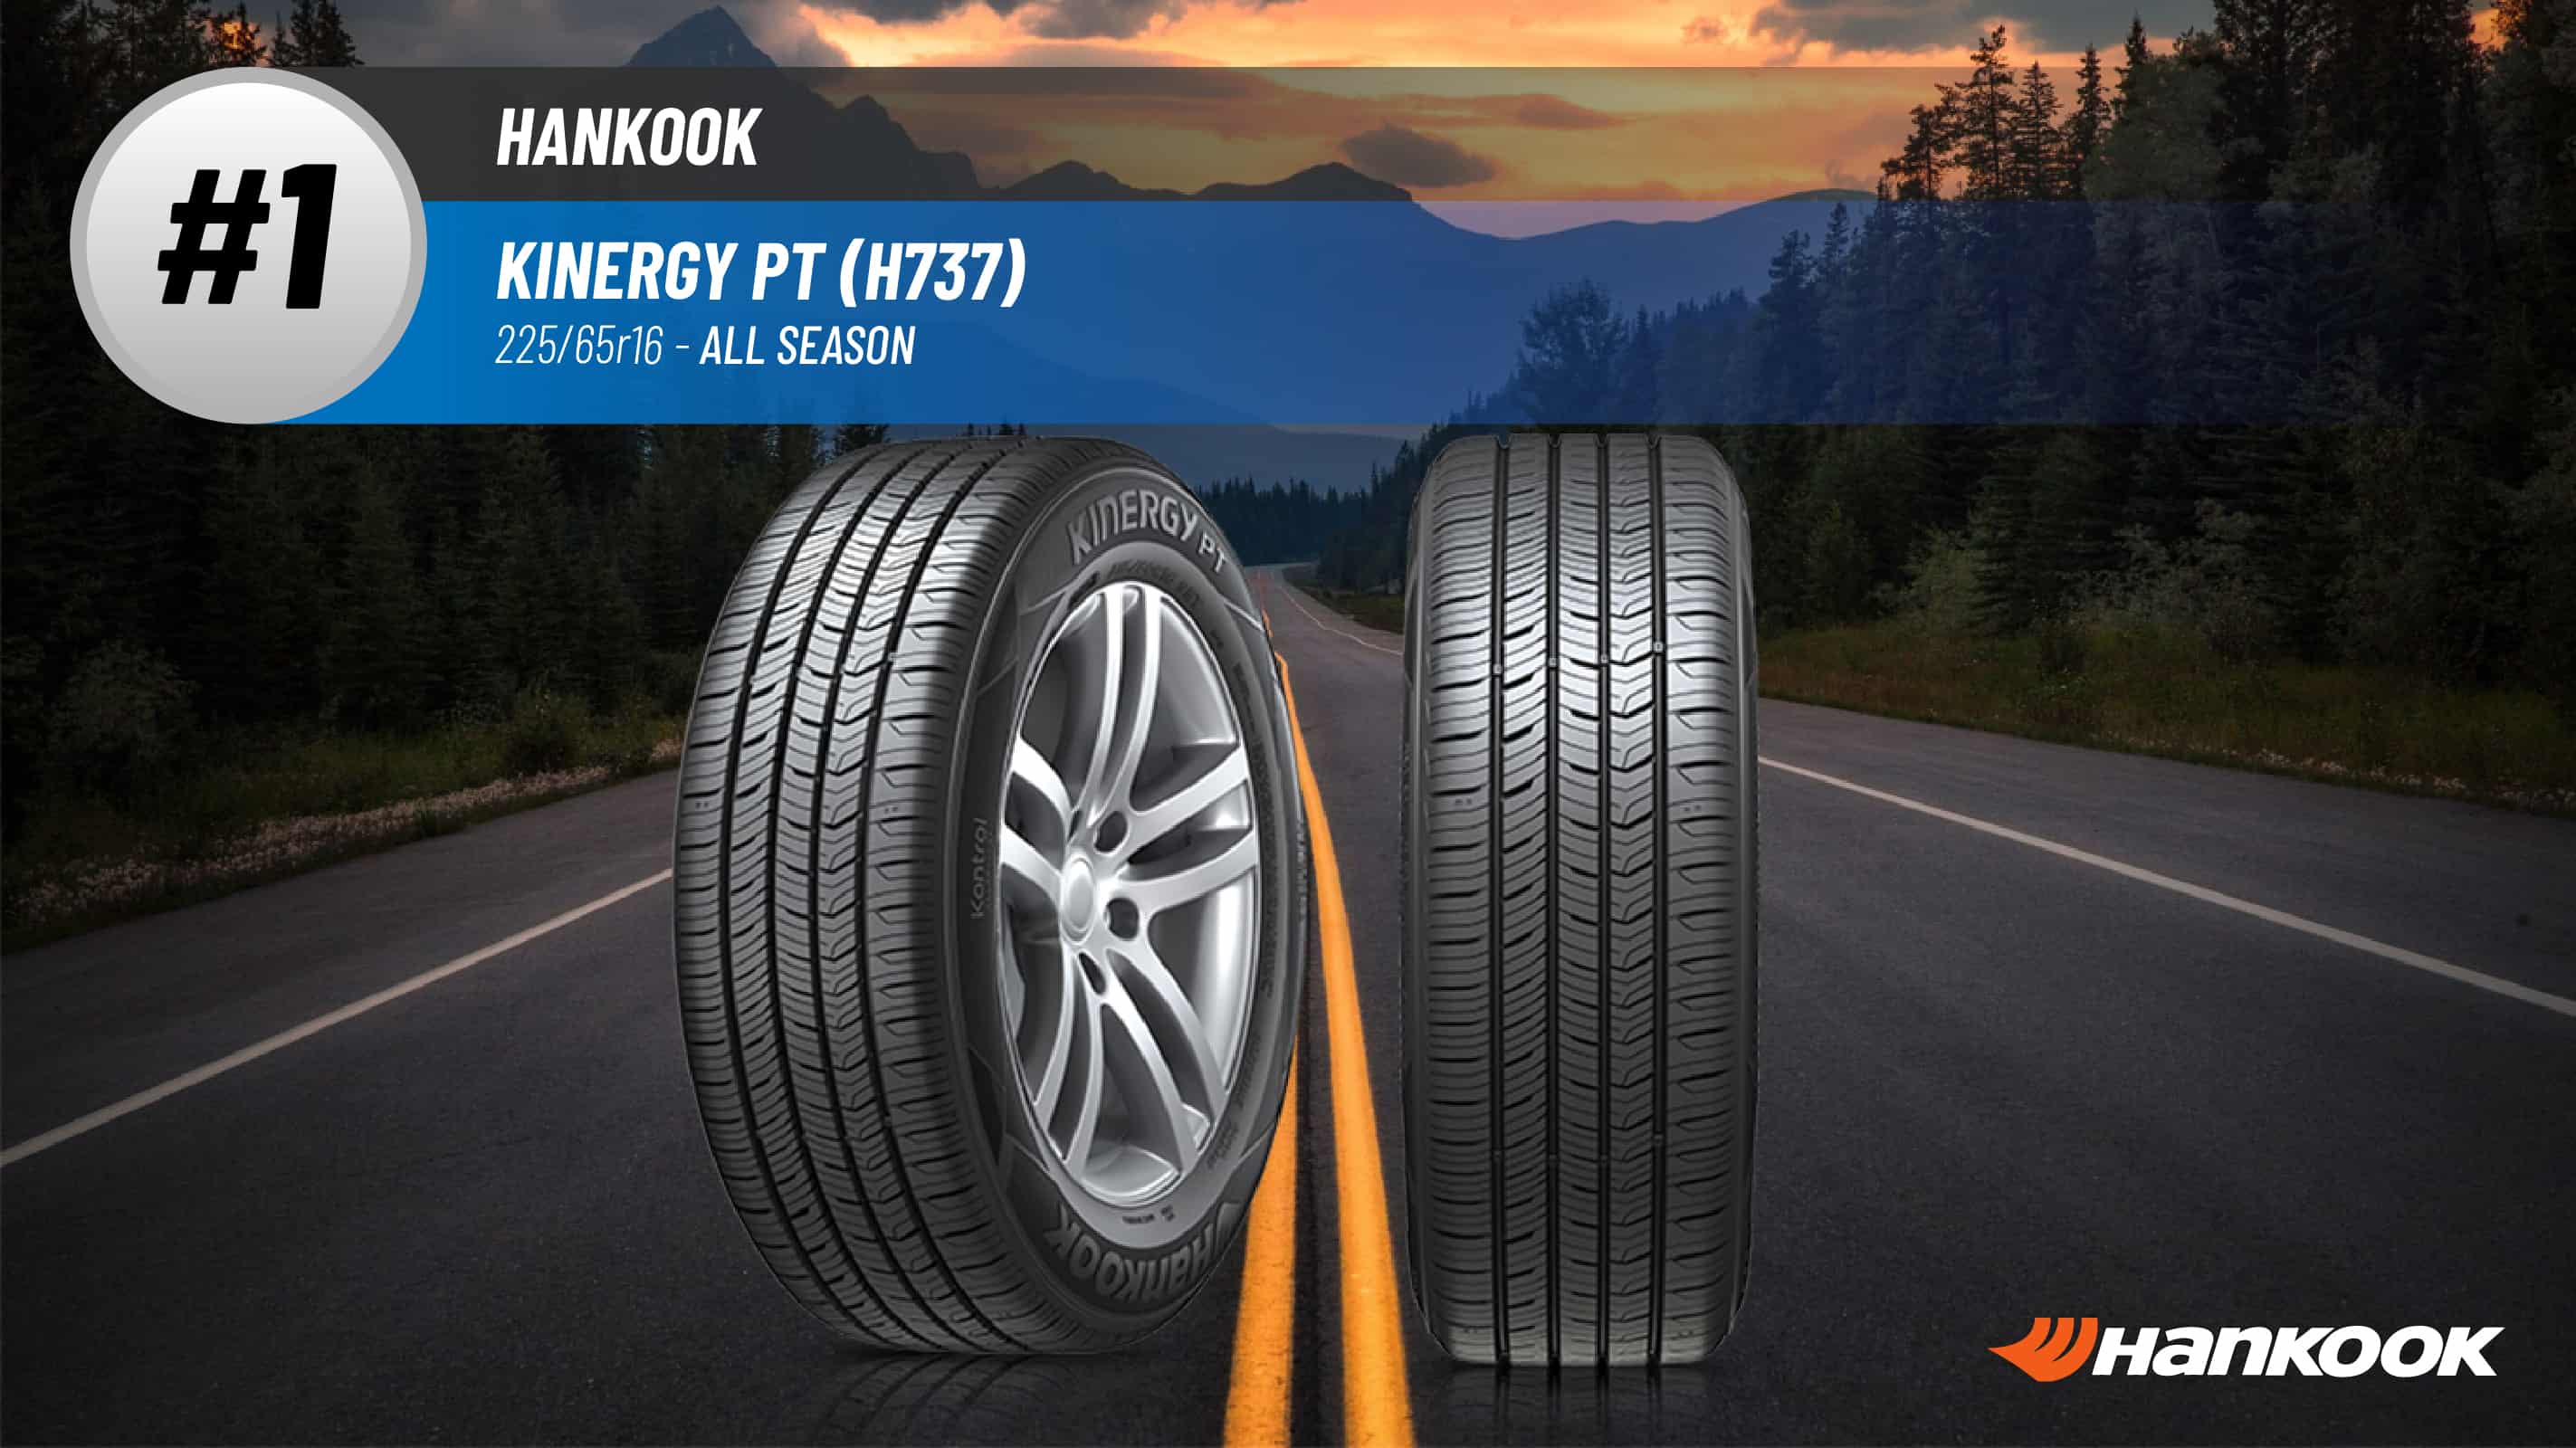 Top #1 All Season Tires: Hankook Kinergy PT (H737) – best 225/65r16